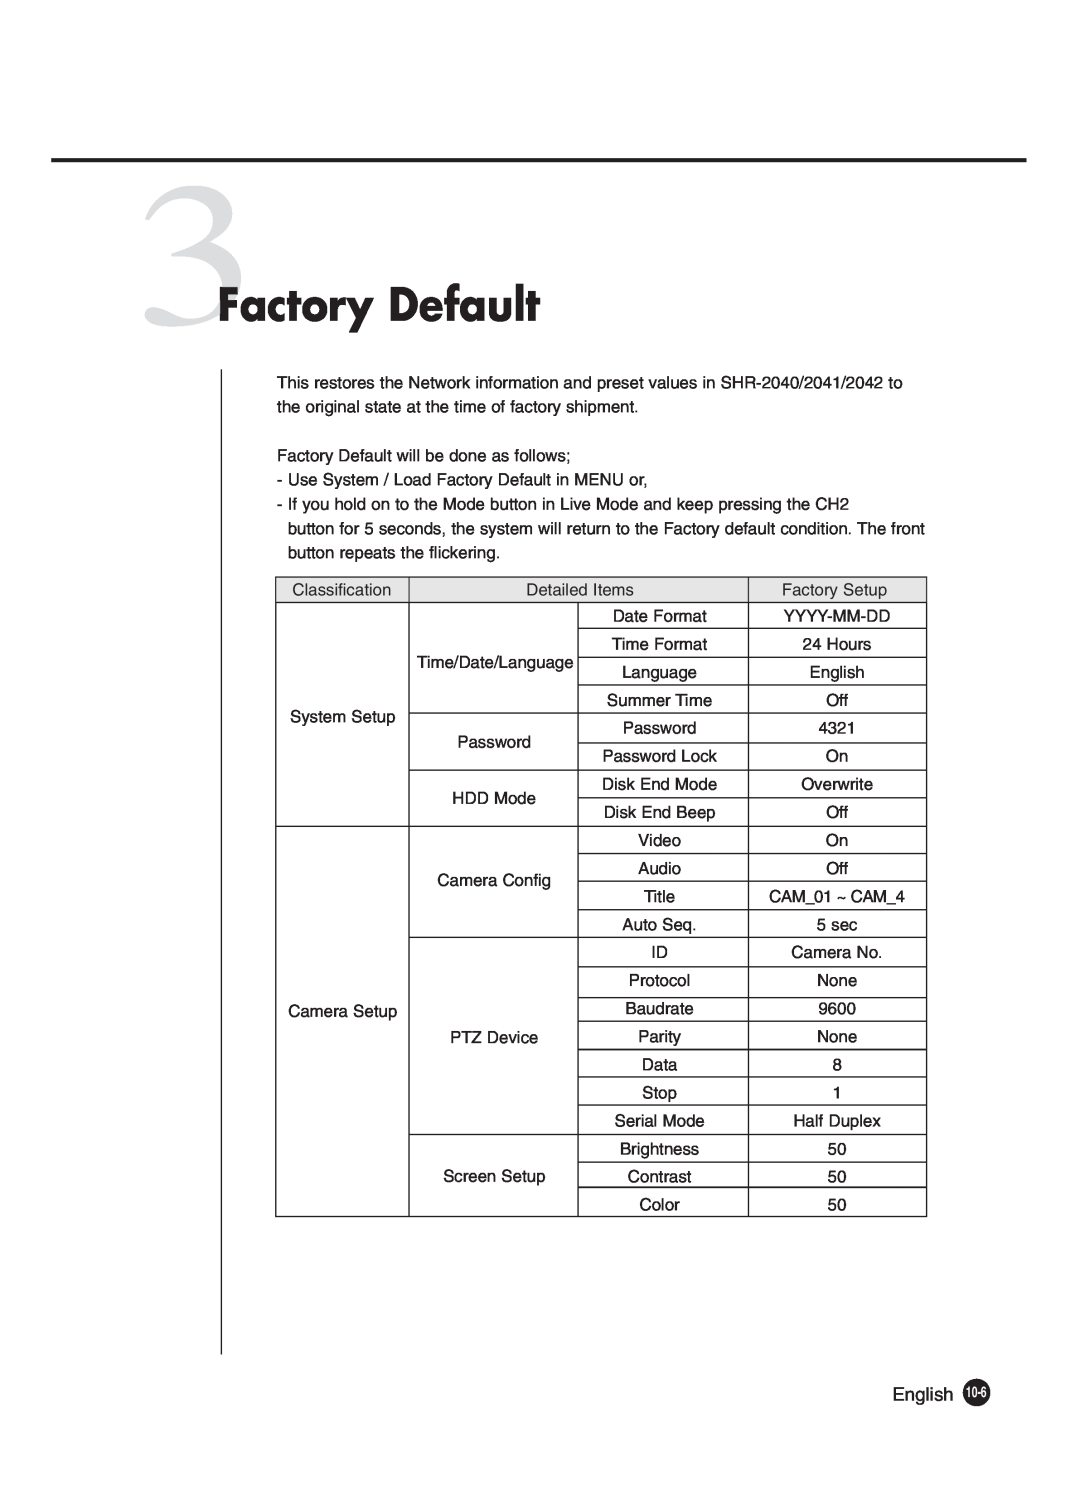 Samsung SHR-2040P250, SHR-2042P250 manual 3Factory Default, English 